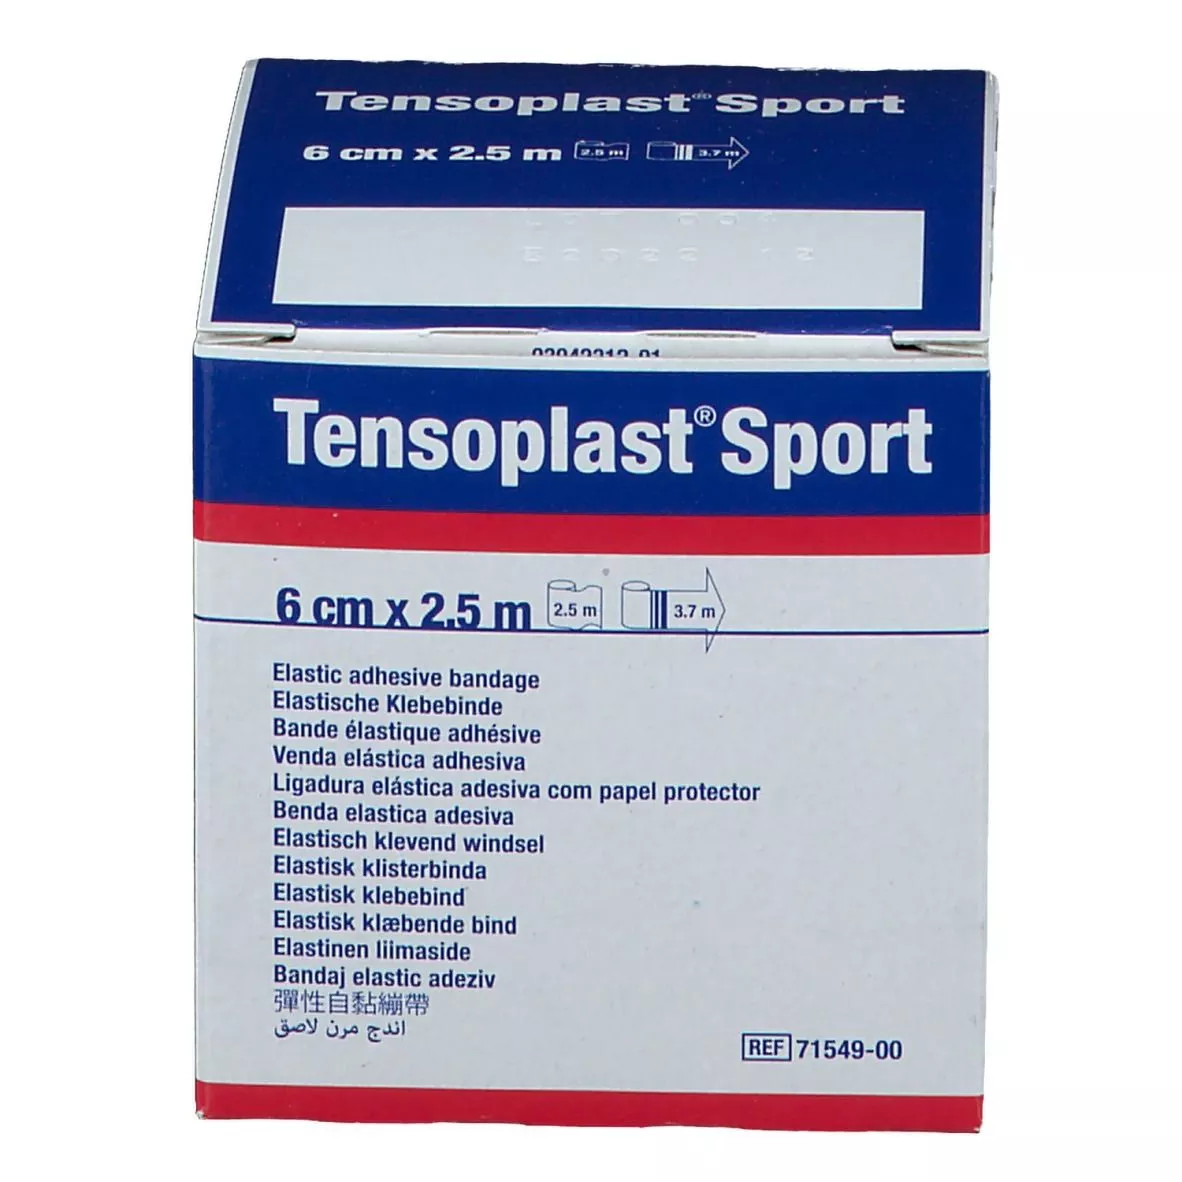 Bandaj adeziv elastic Tensoplast Sport 3cm x 2.5cm